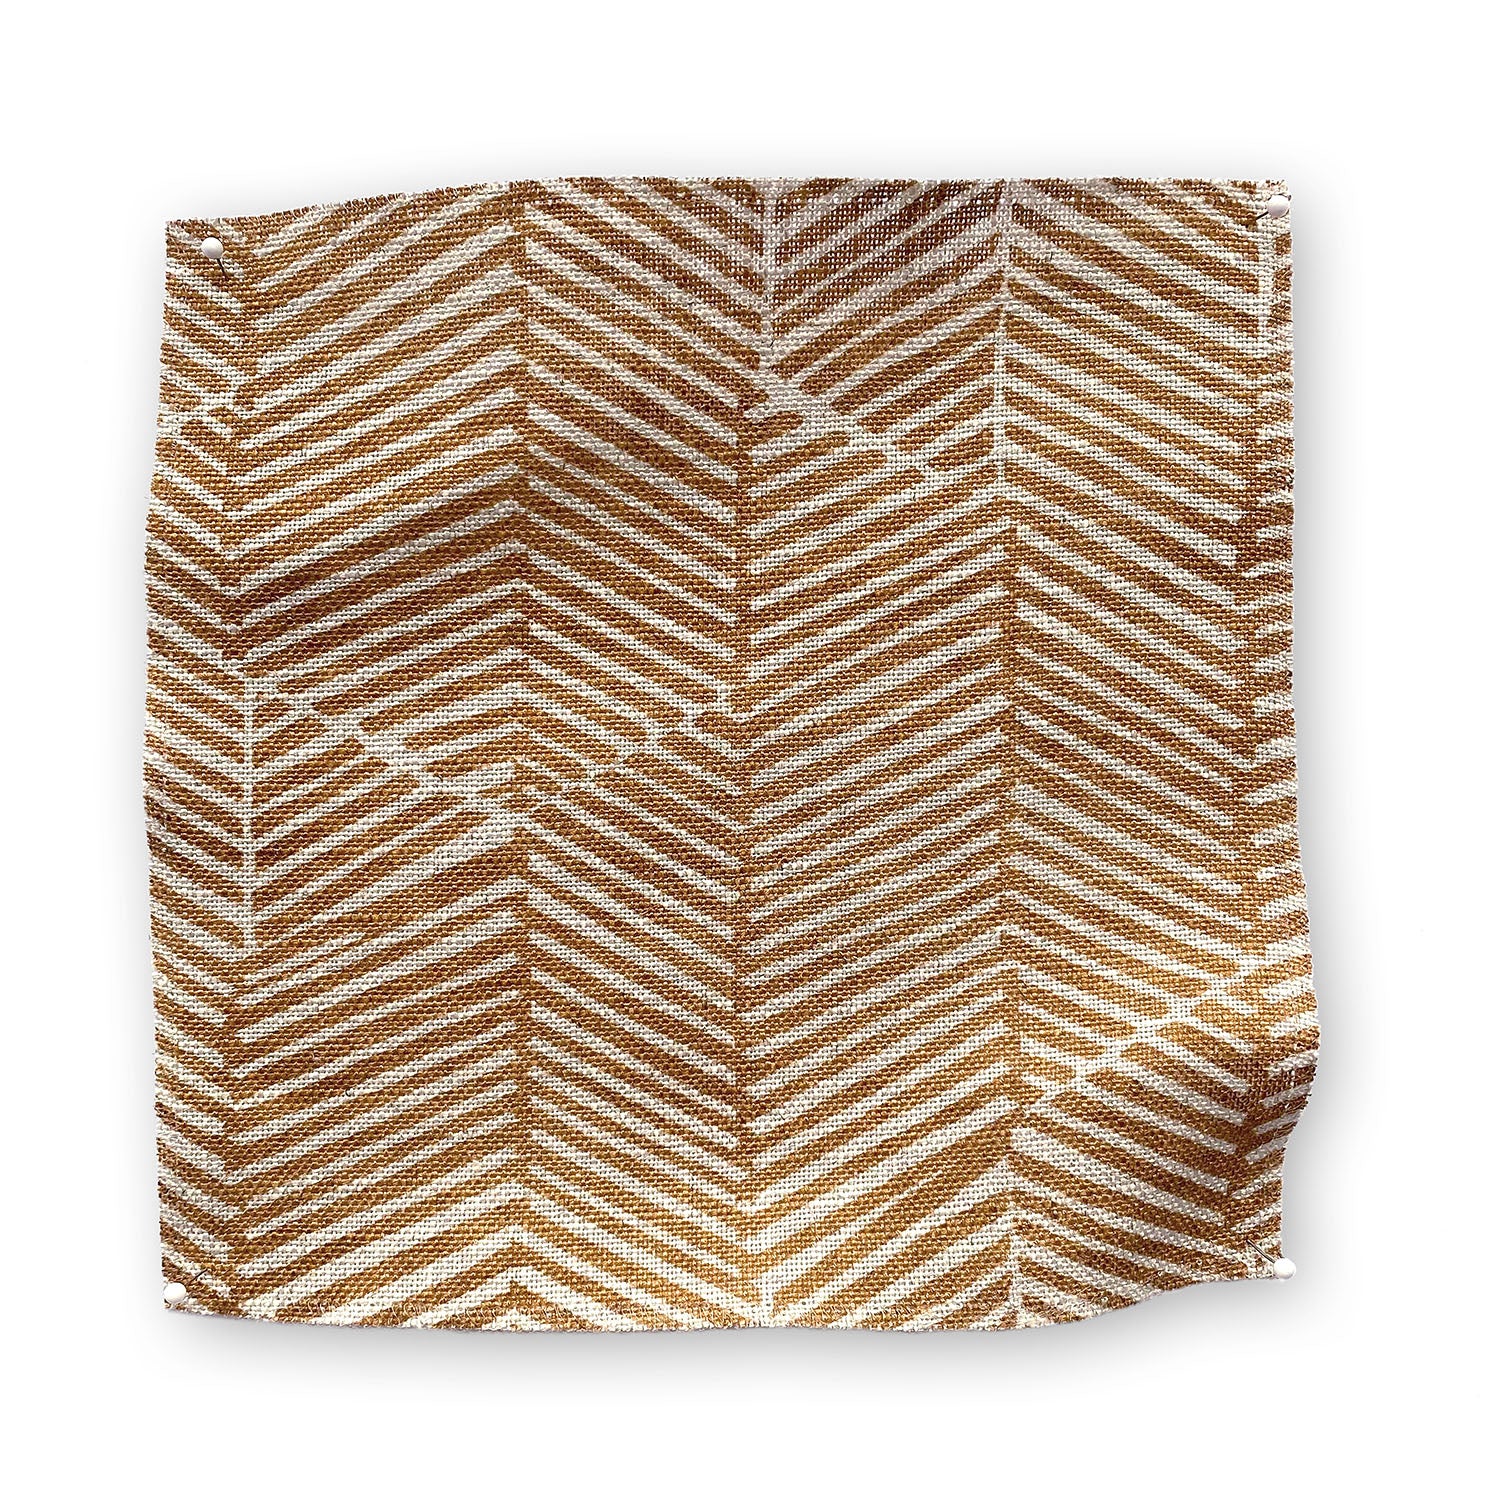 Square fabric swatch in a dense herringbone print in sienna on a tan field.